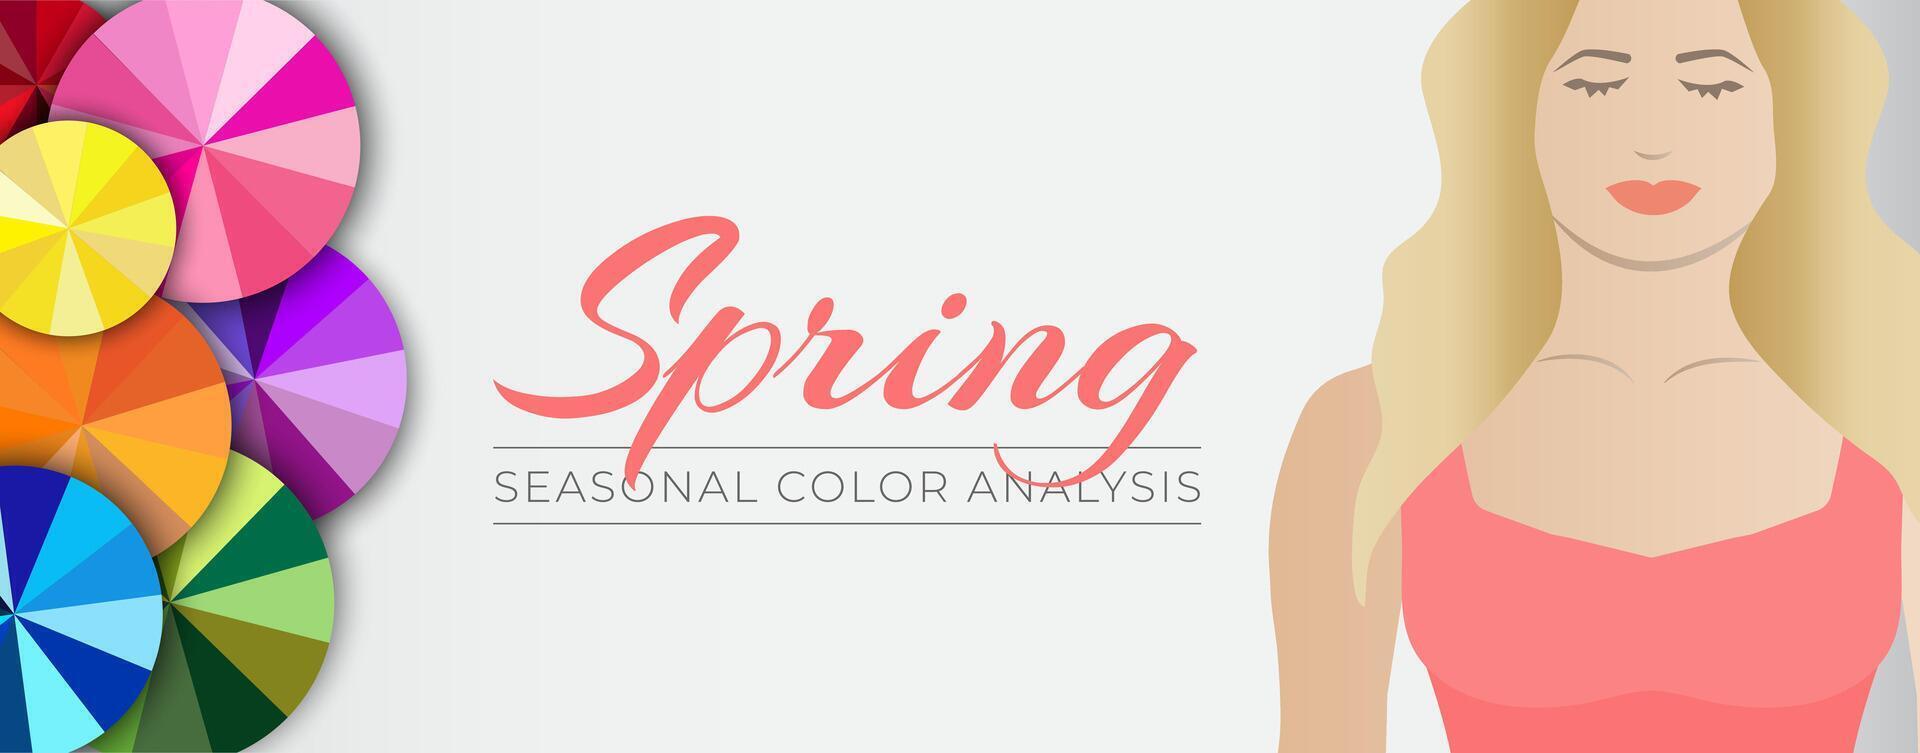 saisonal Farbe Analyse Frühling Banner Illustration mit Farbe Räder vektor